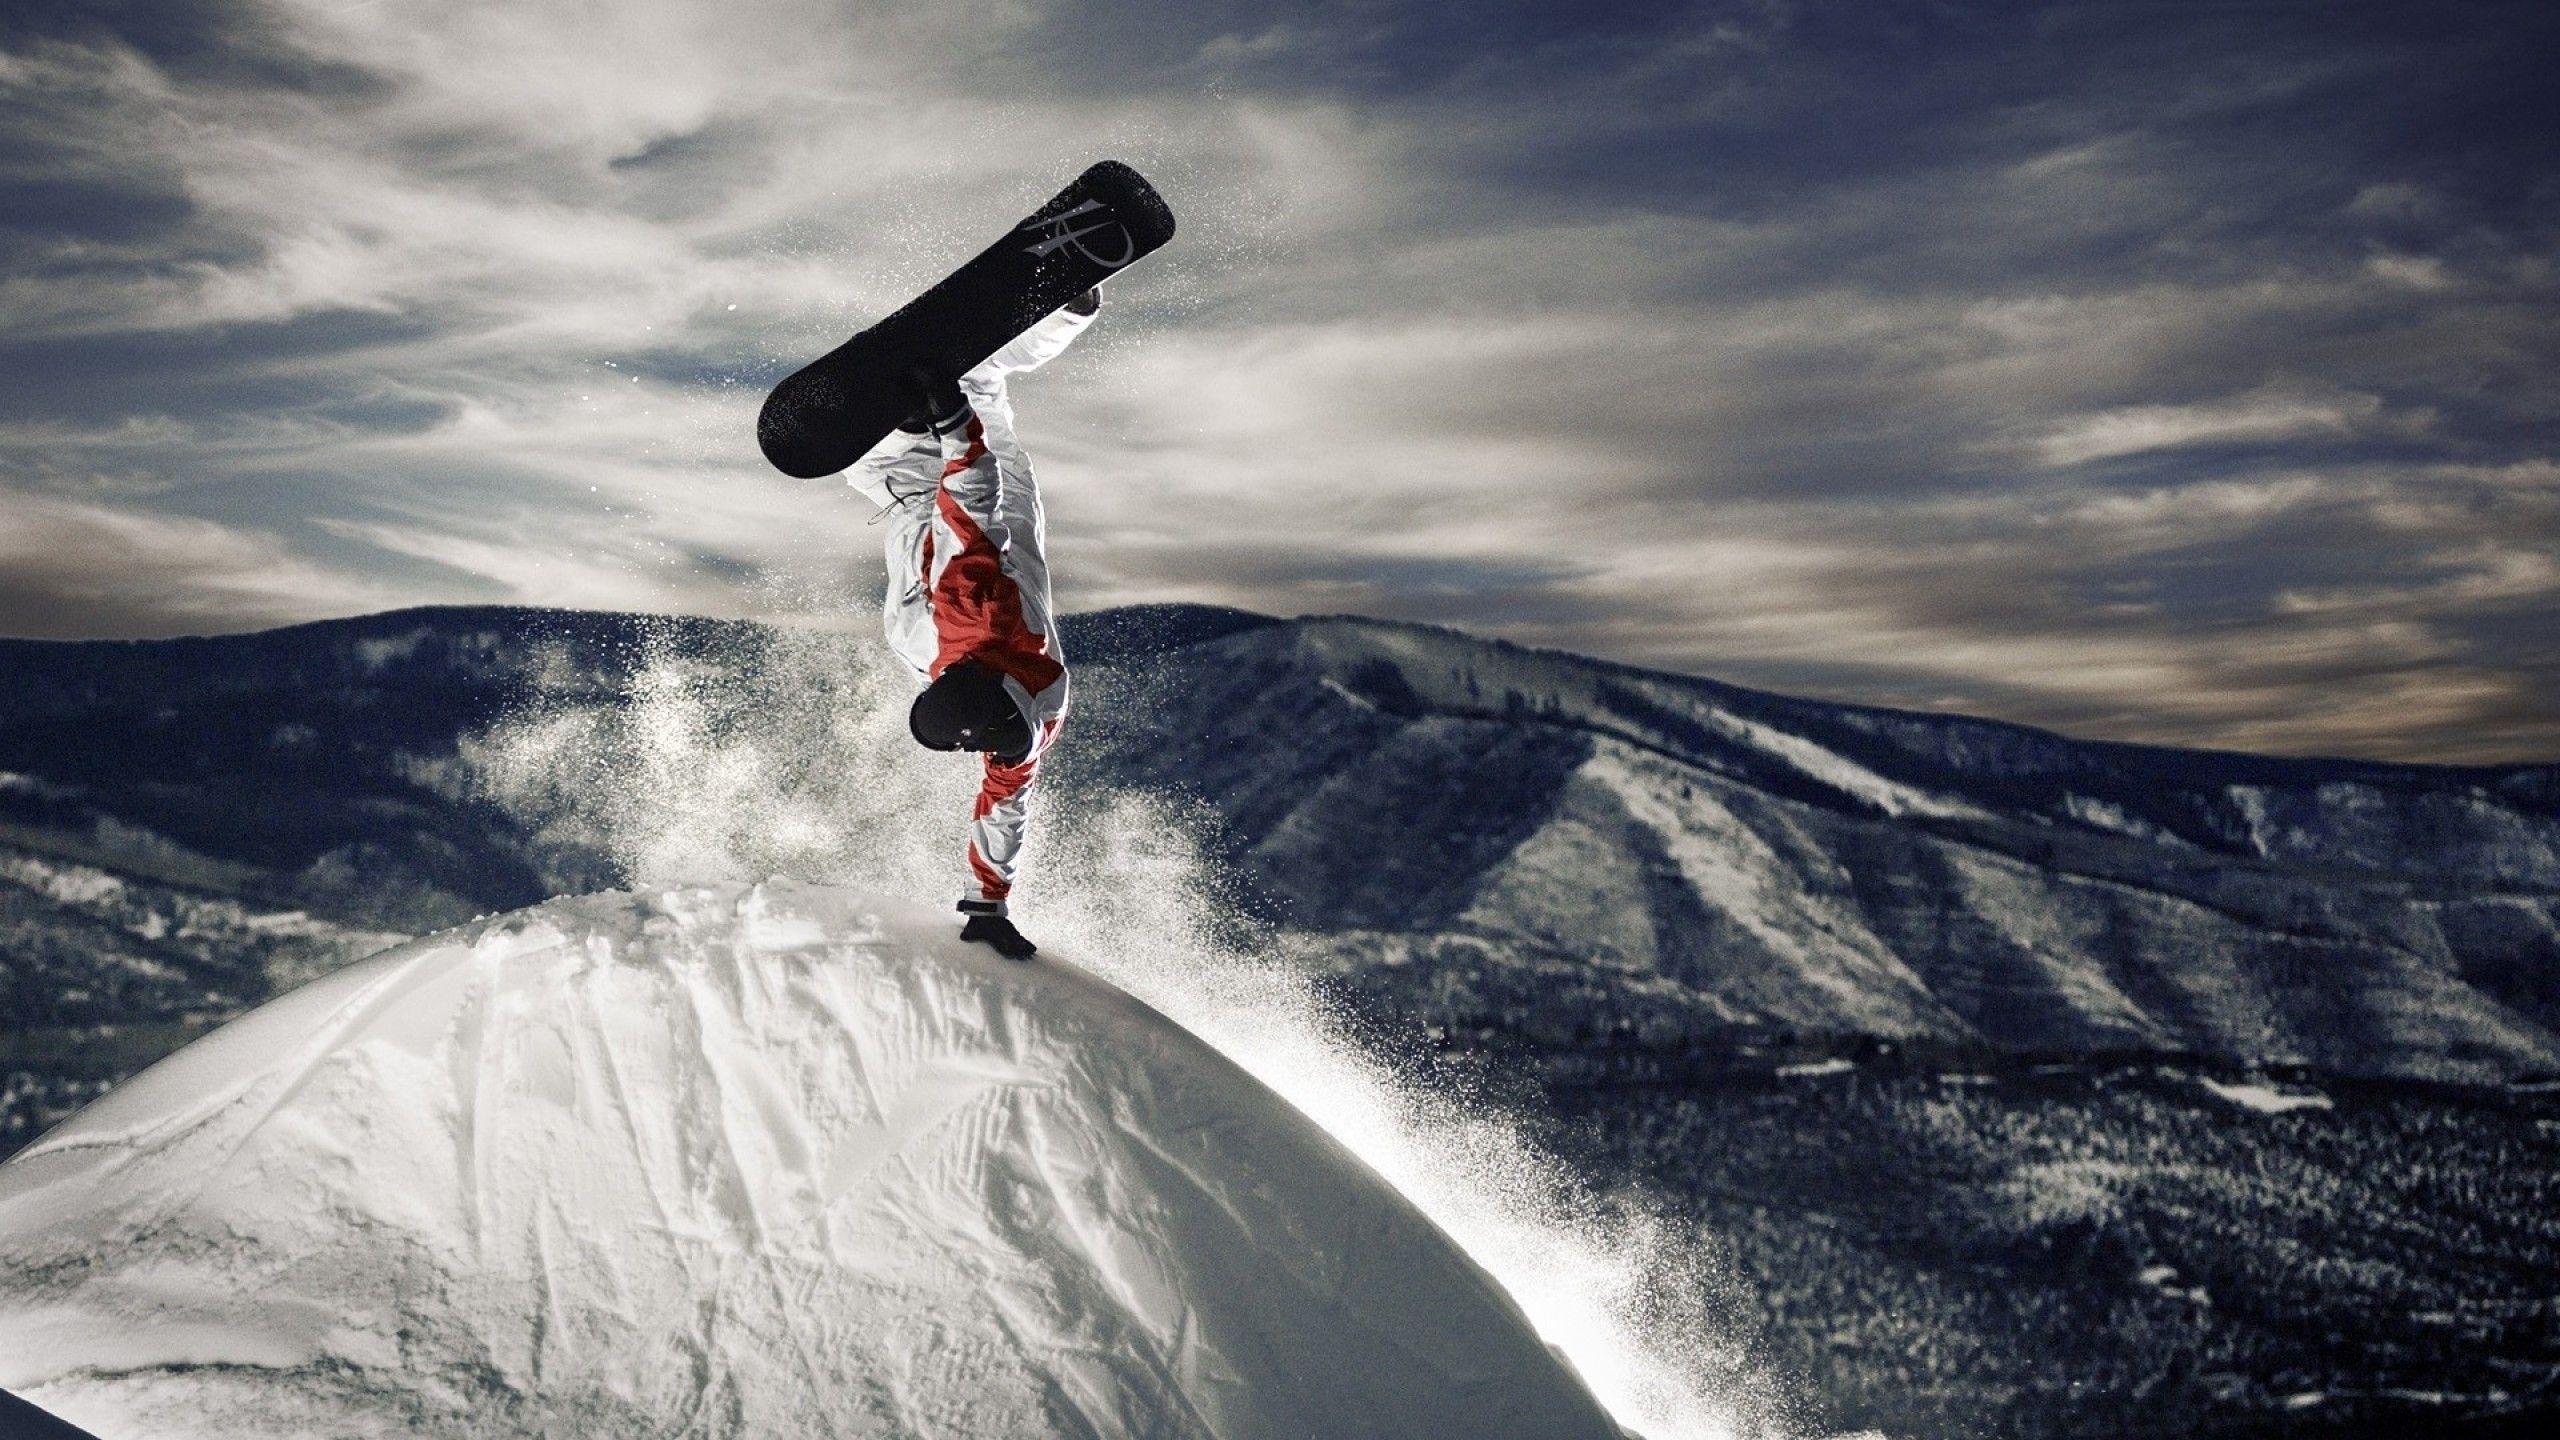 Extreme snowboarding Wallpaper #